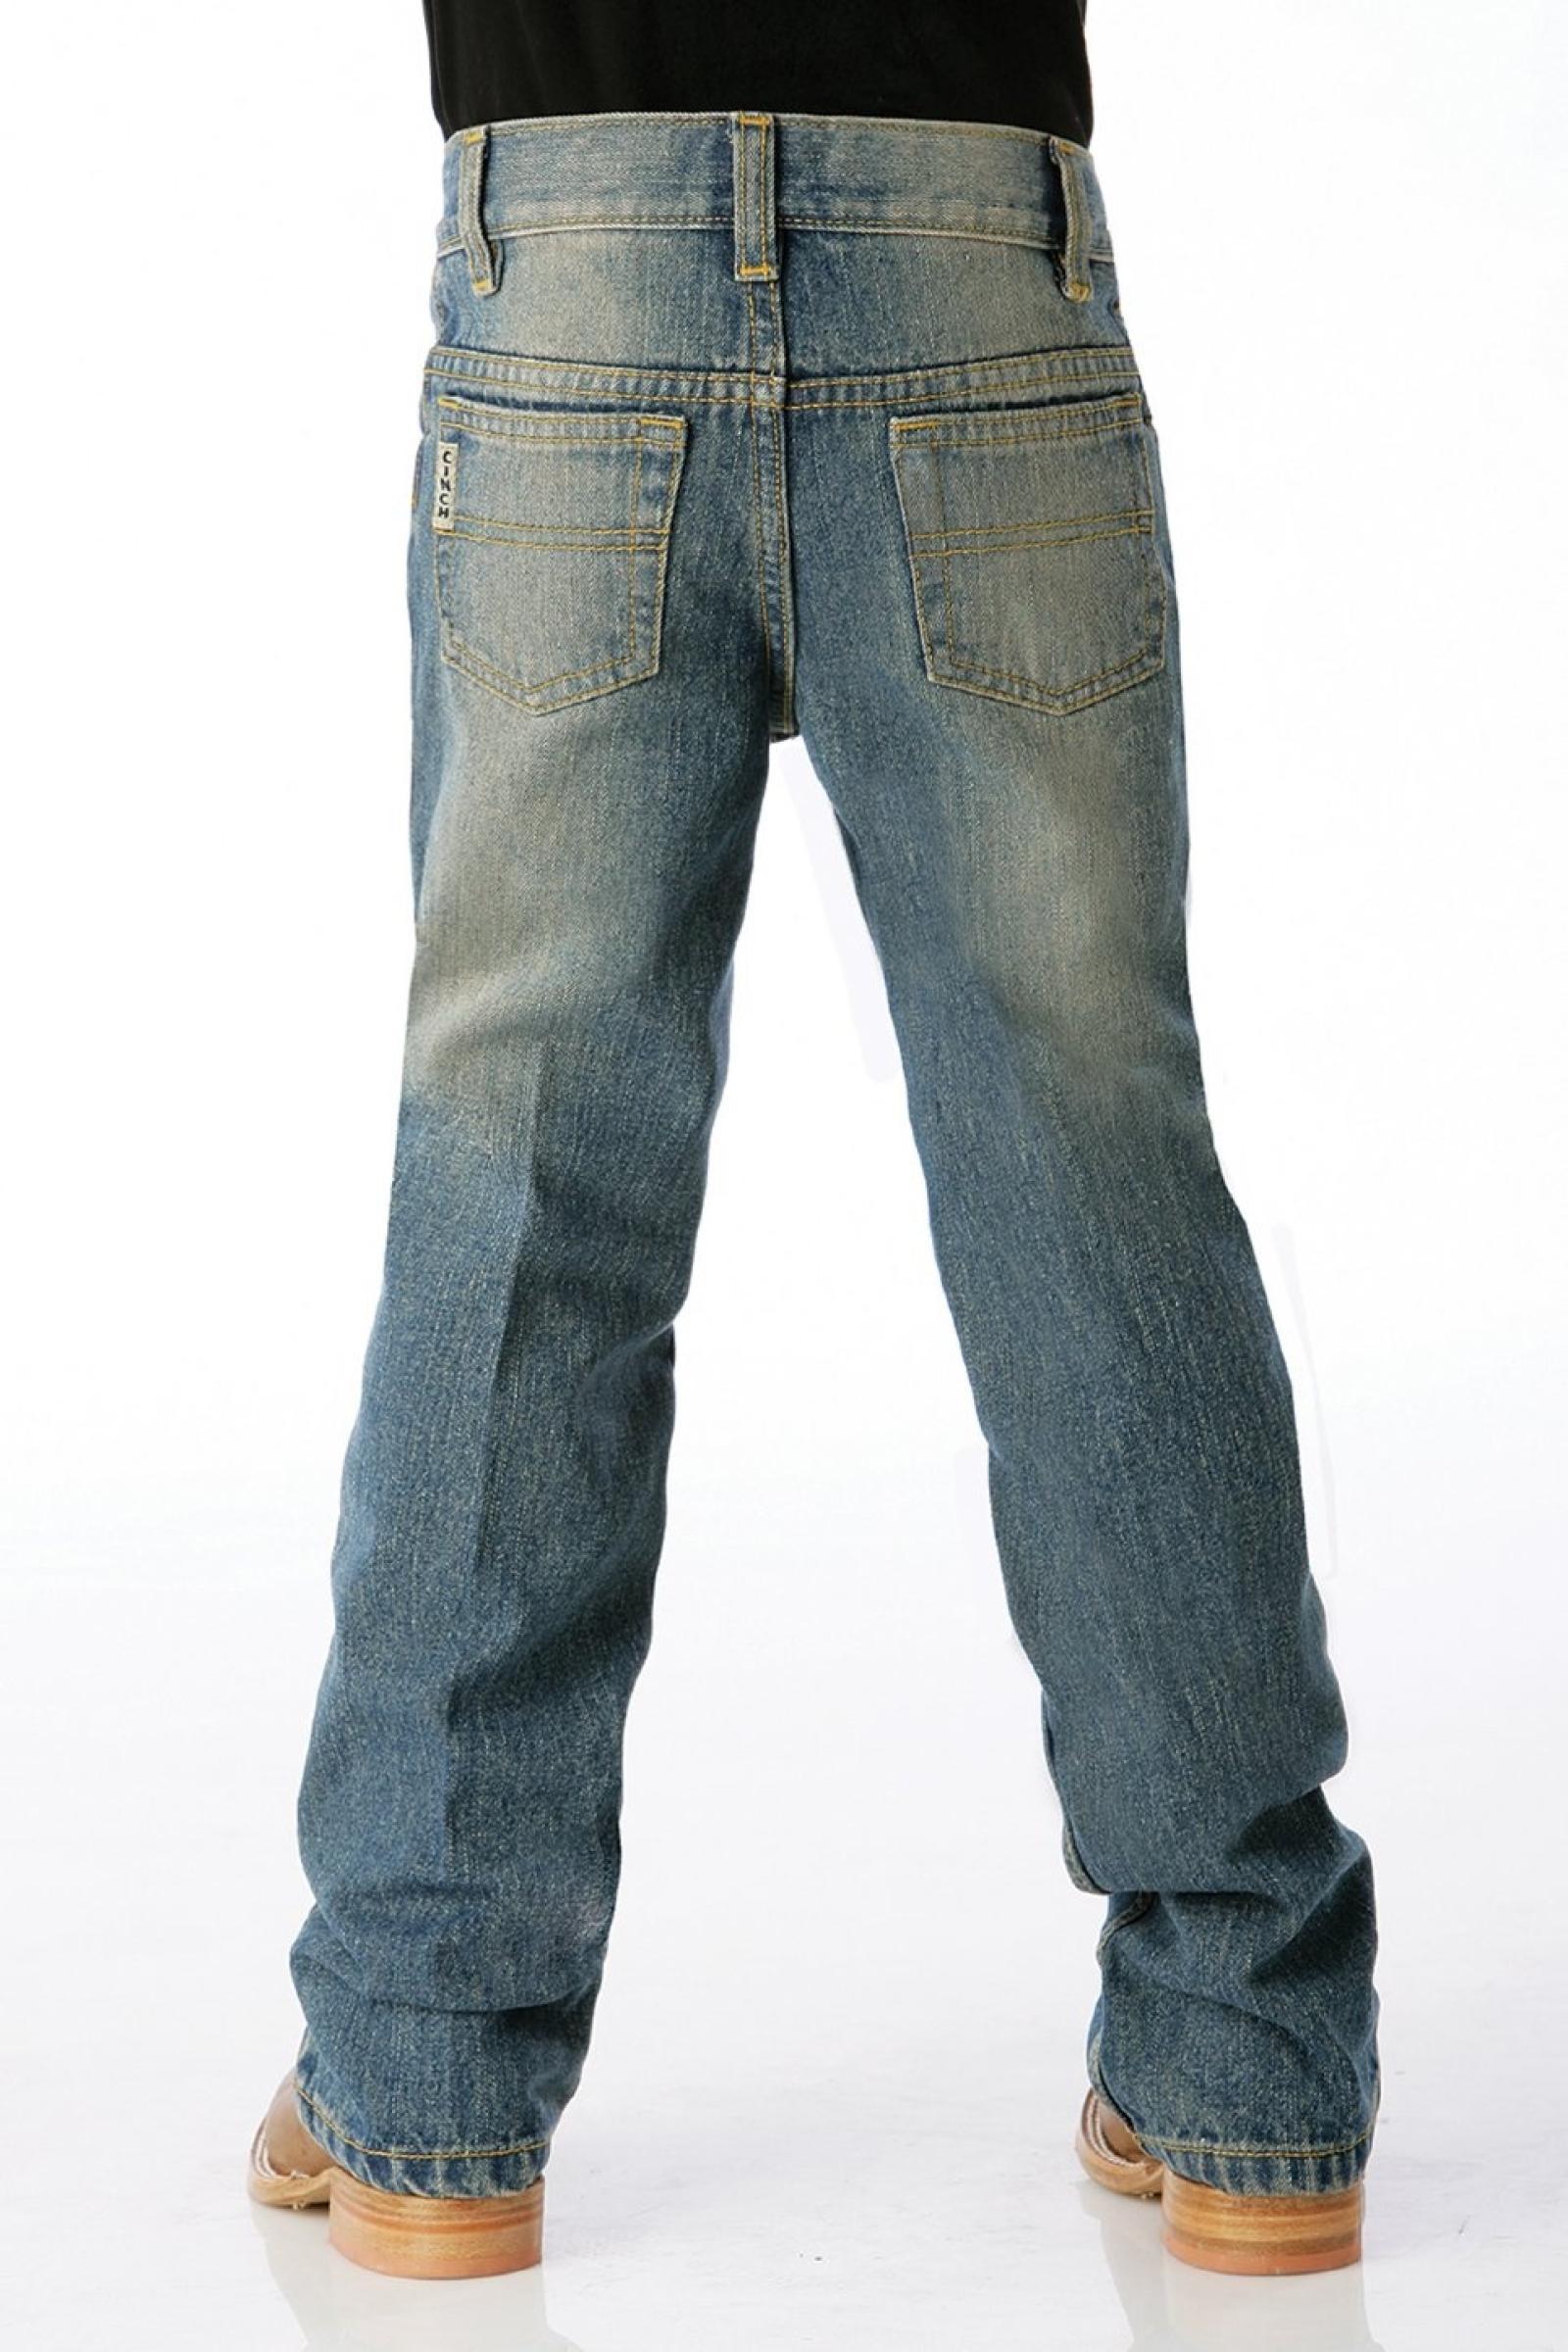 Cinch Boy's Slim Low Rise Jeans